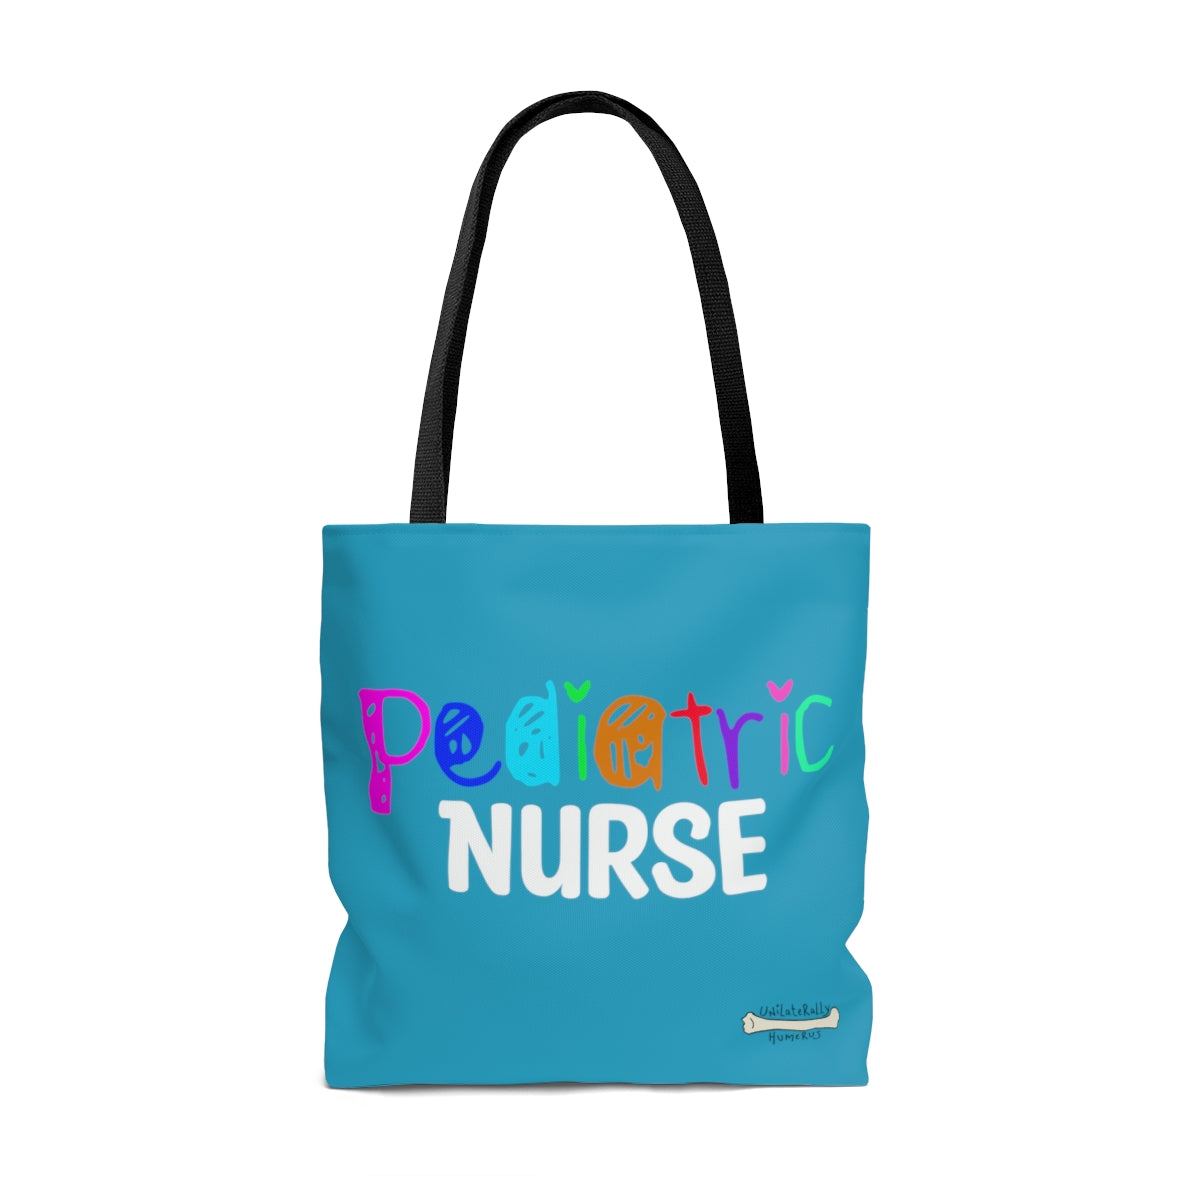 Pediatric Nurse Tote Bag